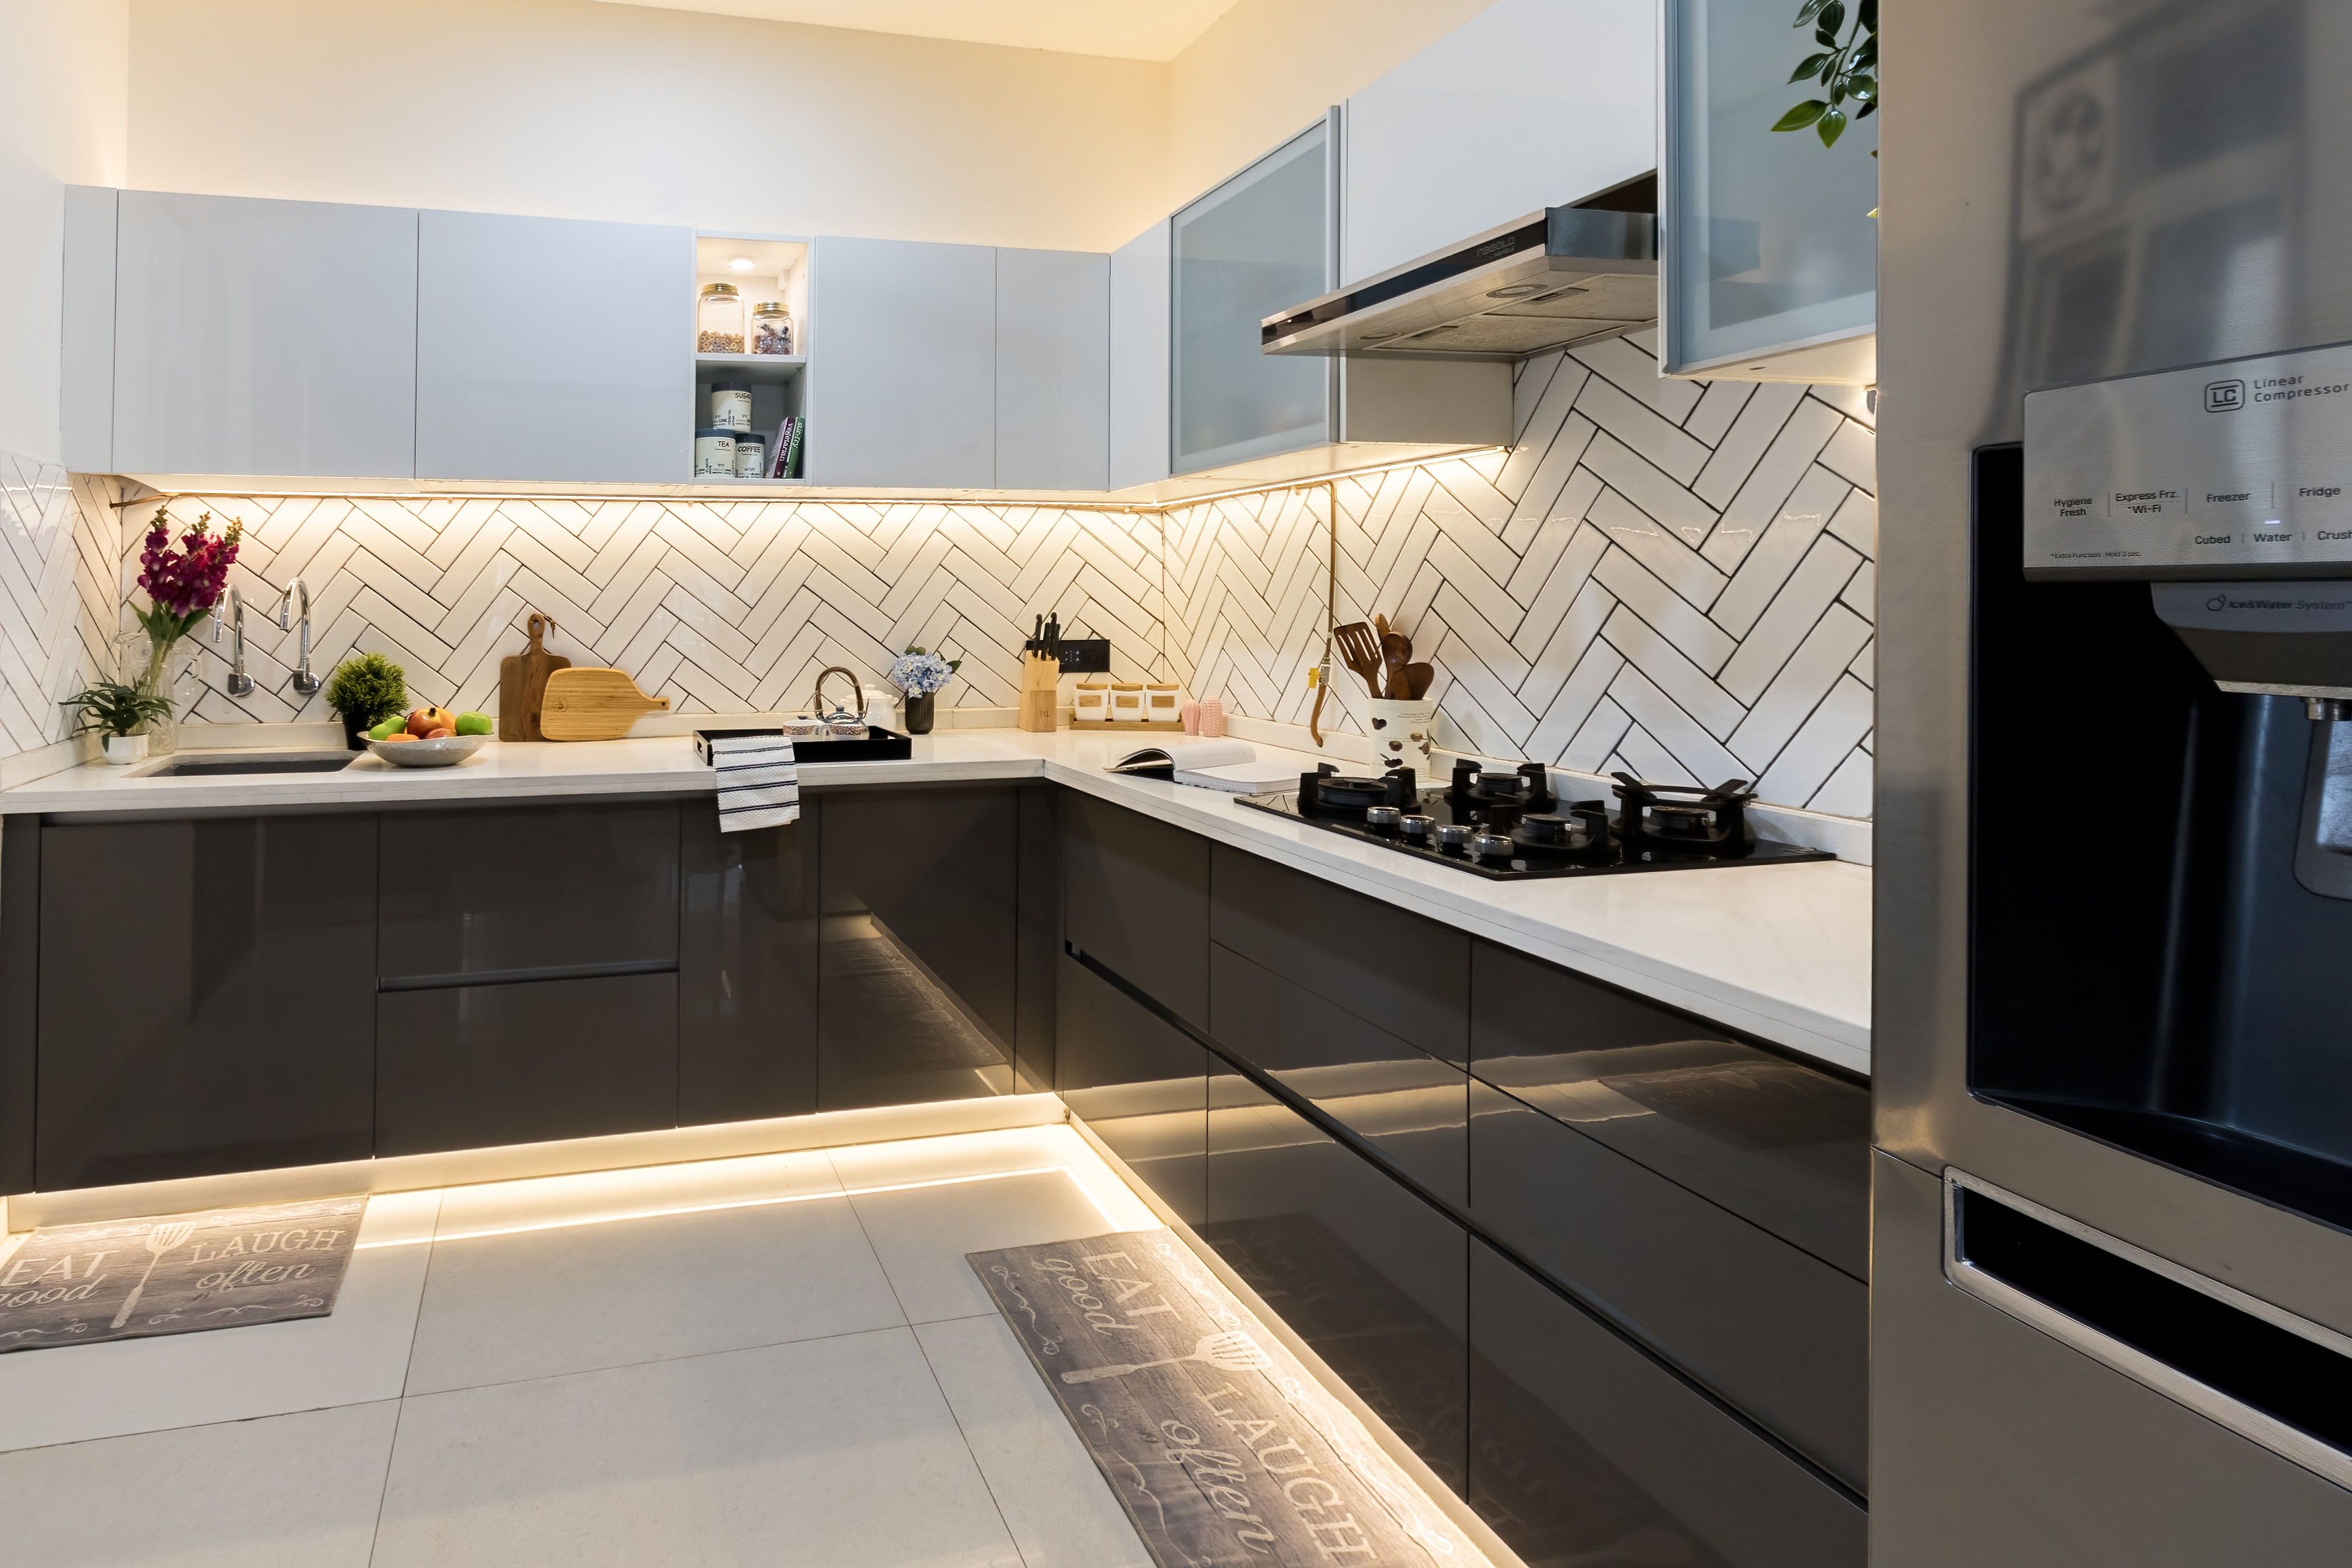 Modern L Shaped Kitchen Design With Seamless High Gloss Finish And Elegant Herringbone Backsplash